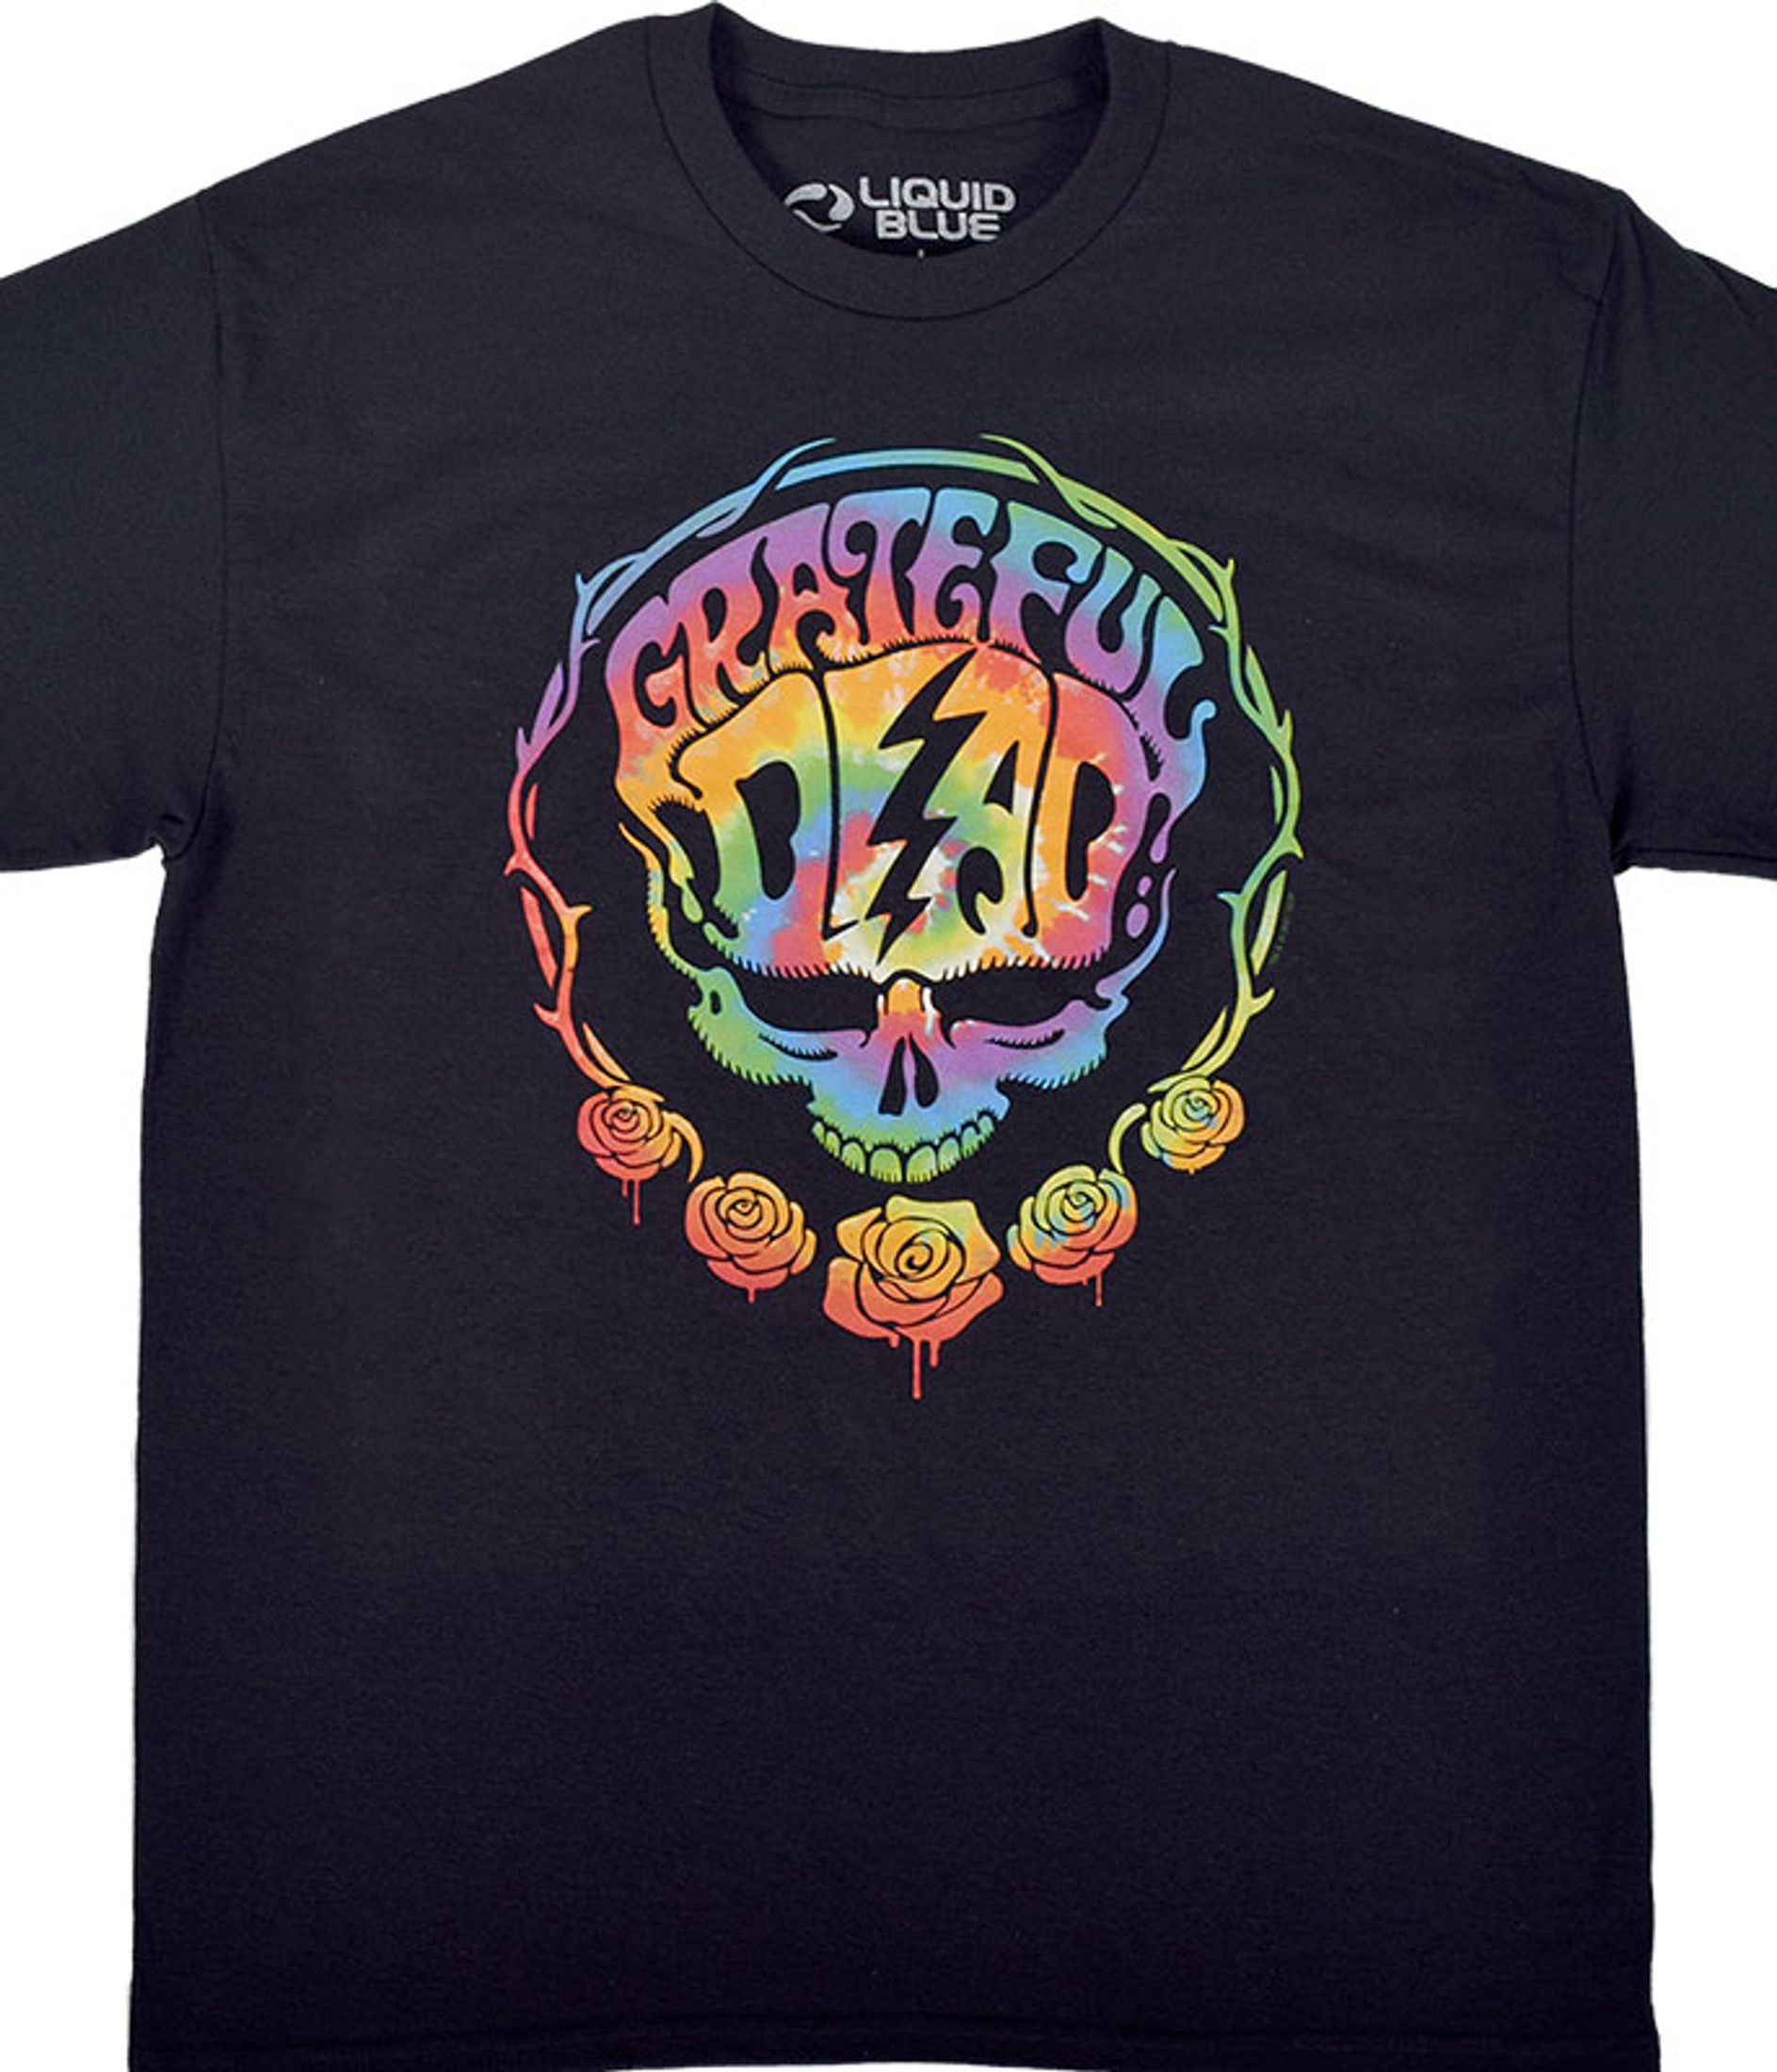 Grateful Dead Deadhead Black T-Shirt - XL